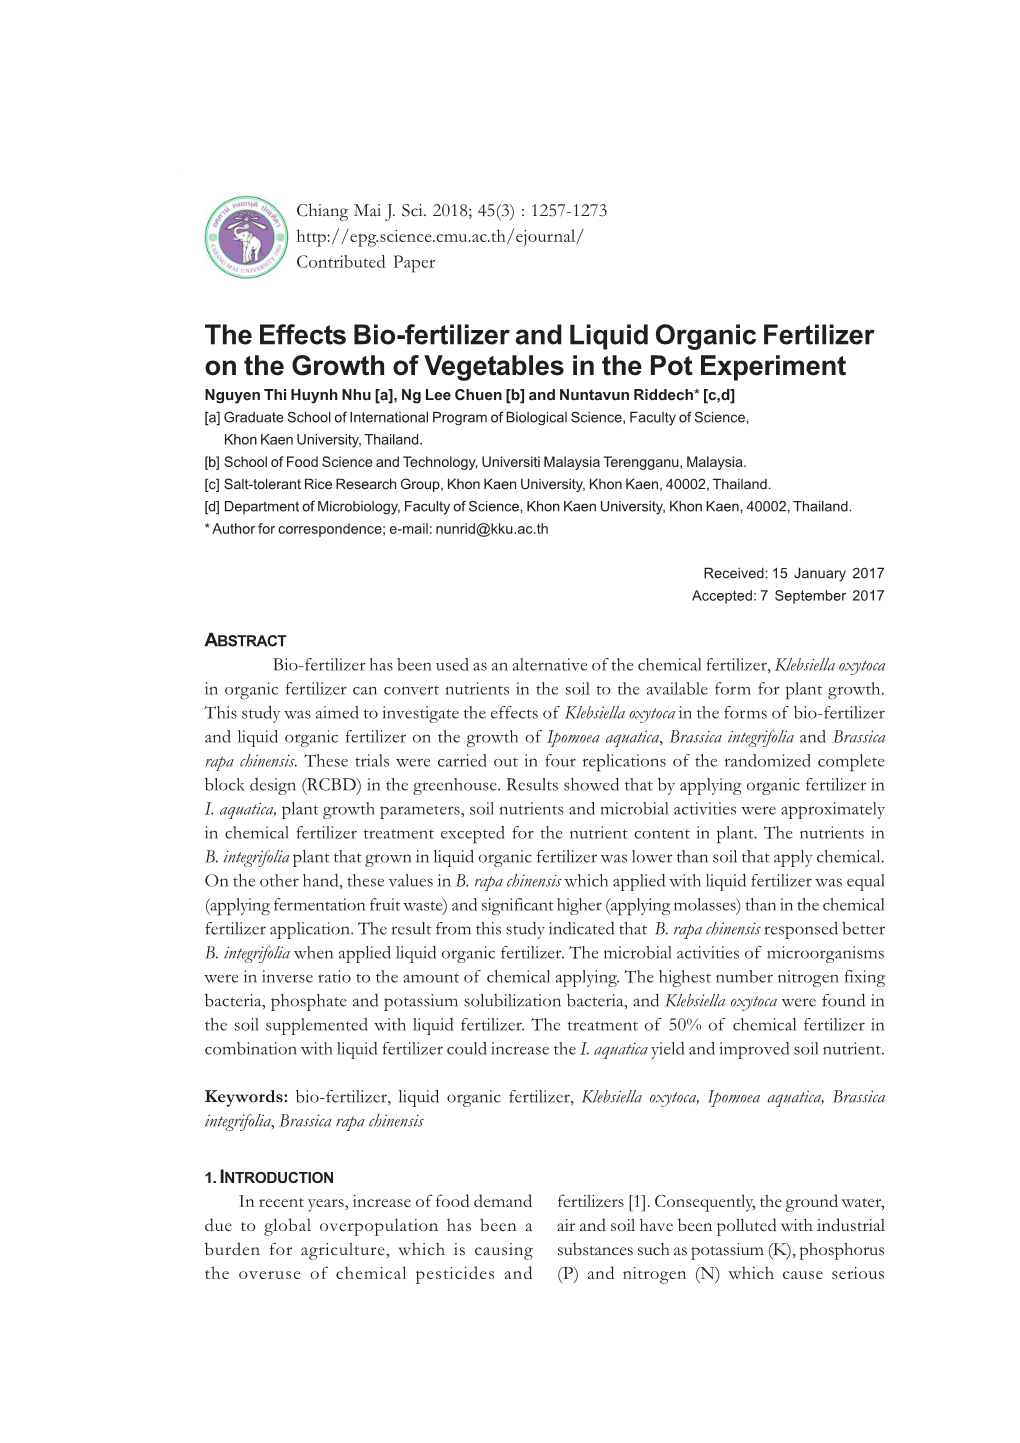 The Effects Bio-Fertilizer and Liquid Organic Fertilizer on the Growth Of